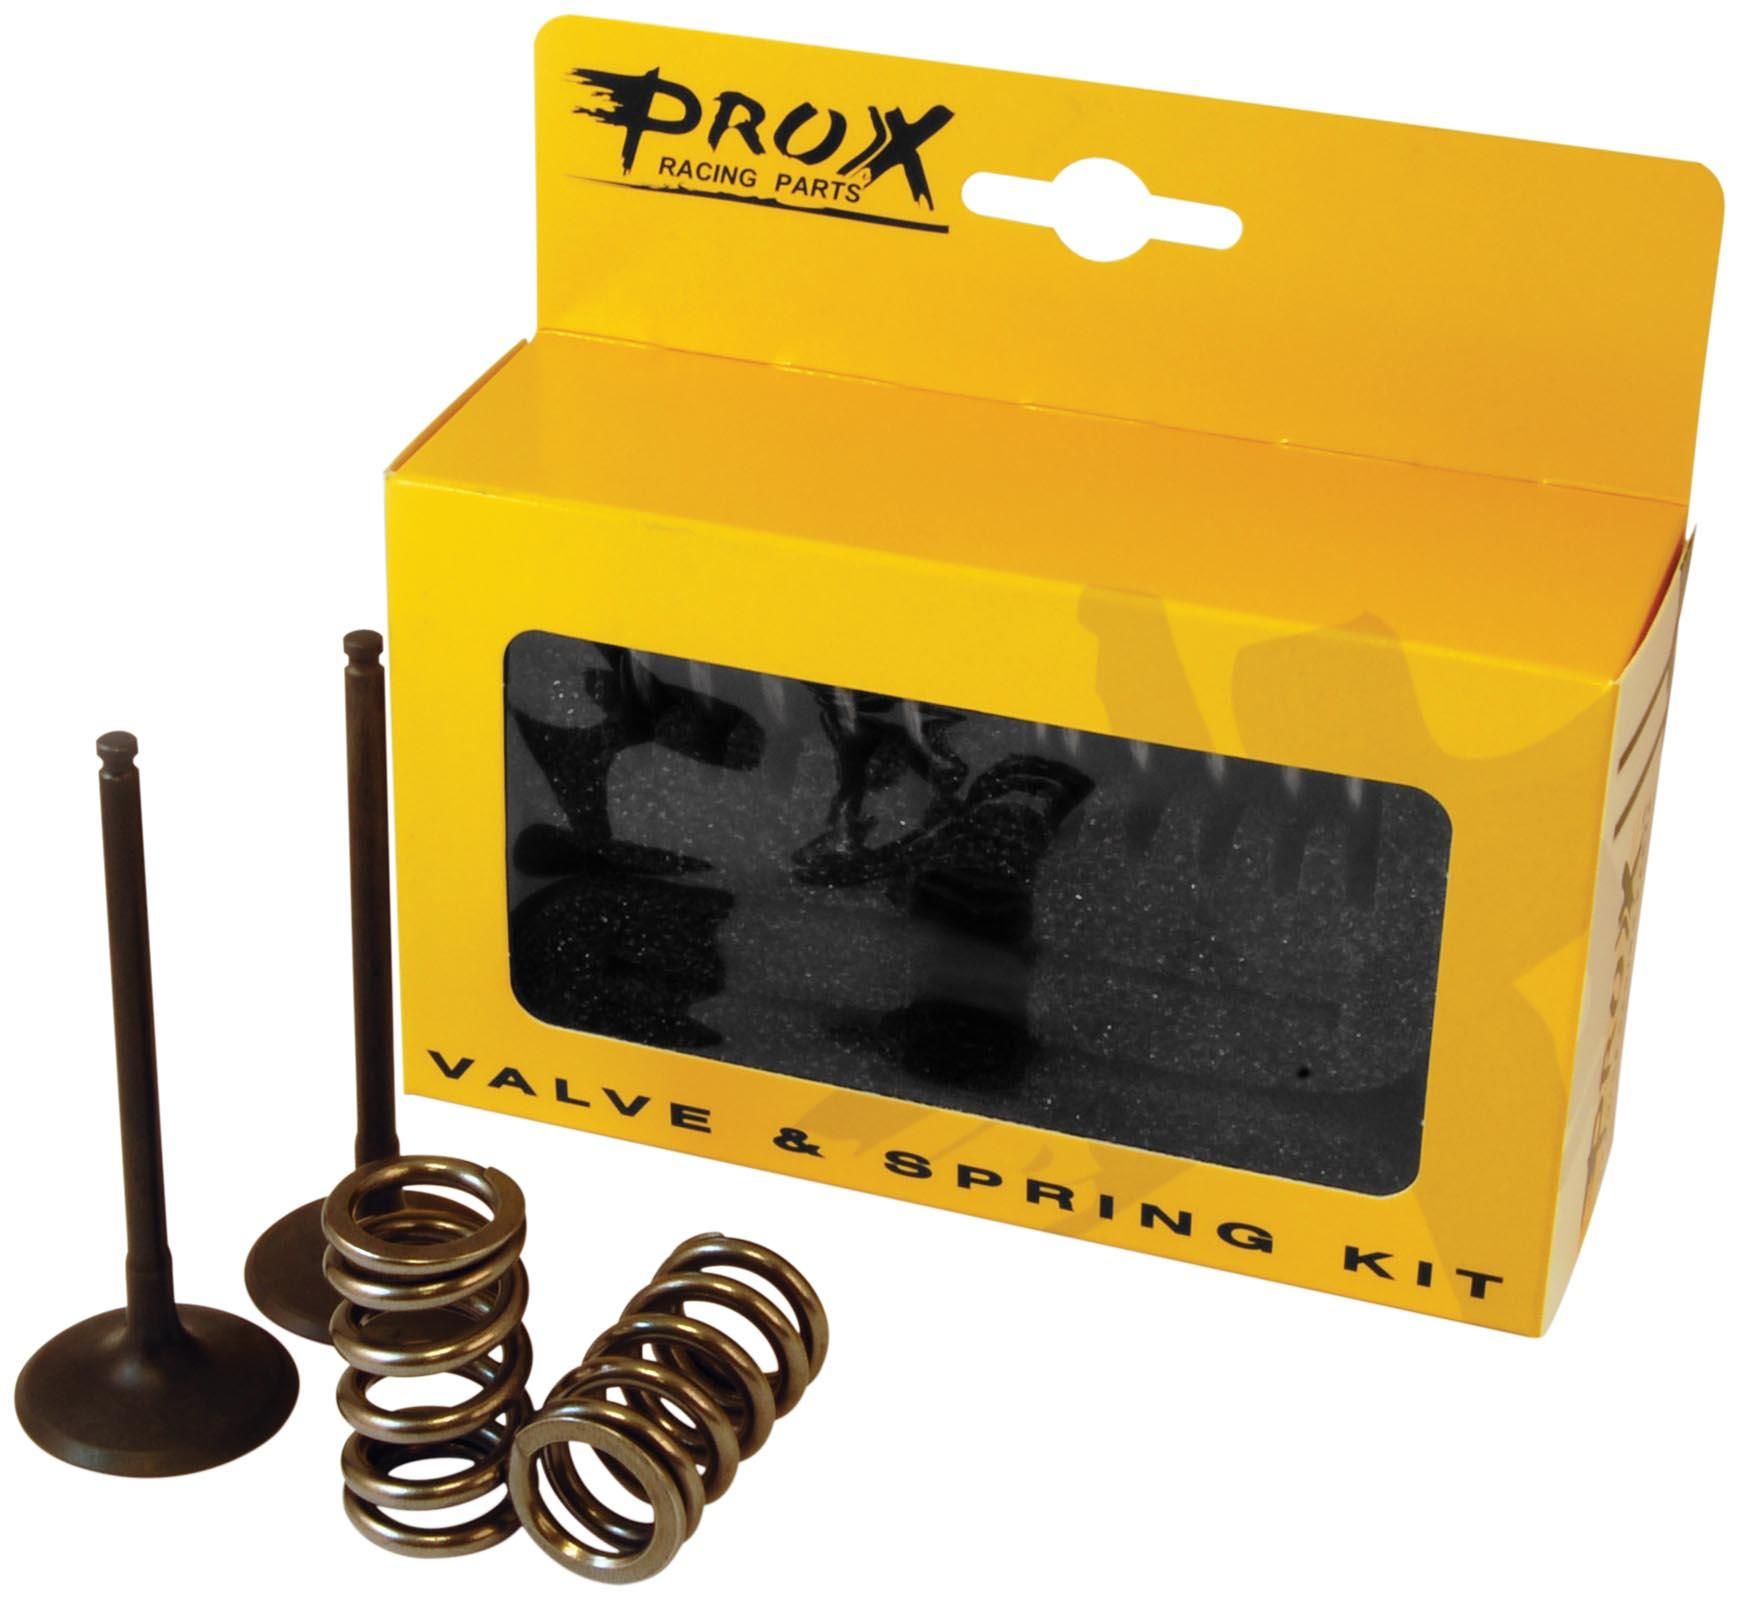 11CY-PROX-28-SIS2424-2 Steel Intake Valve and Spring Kit